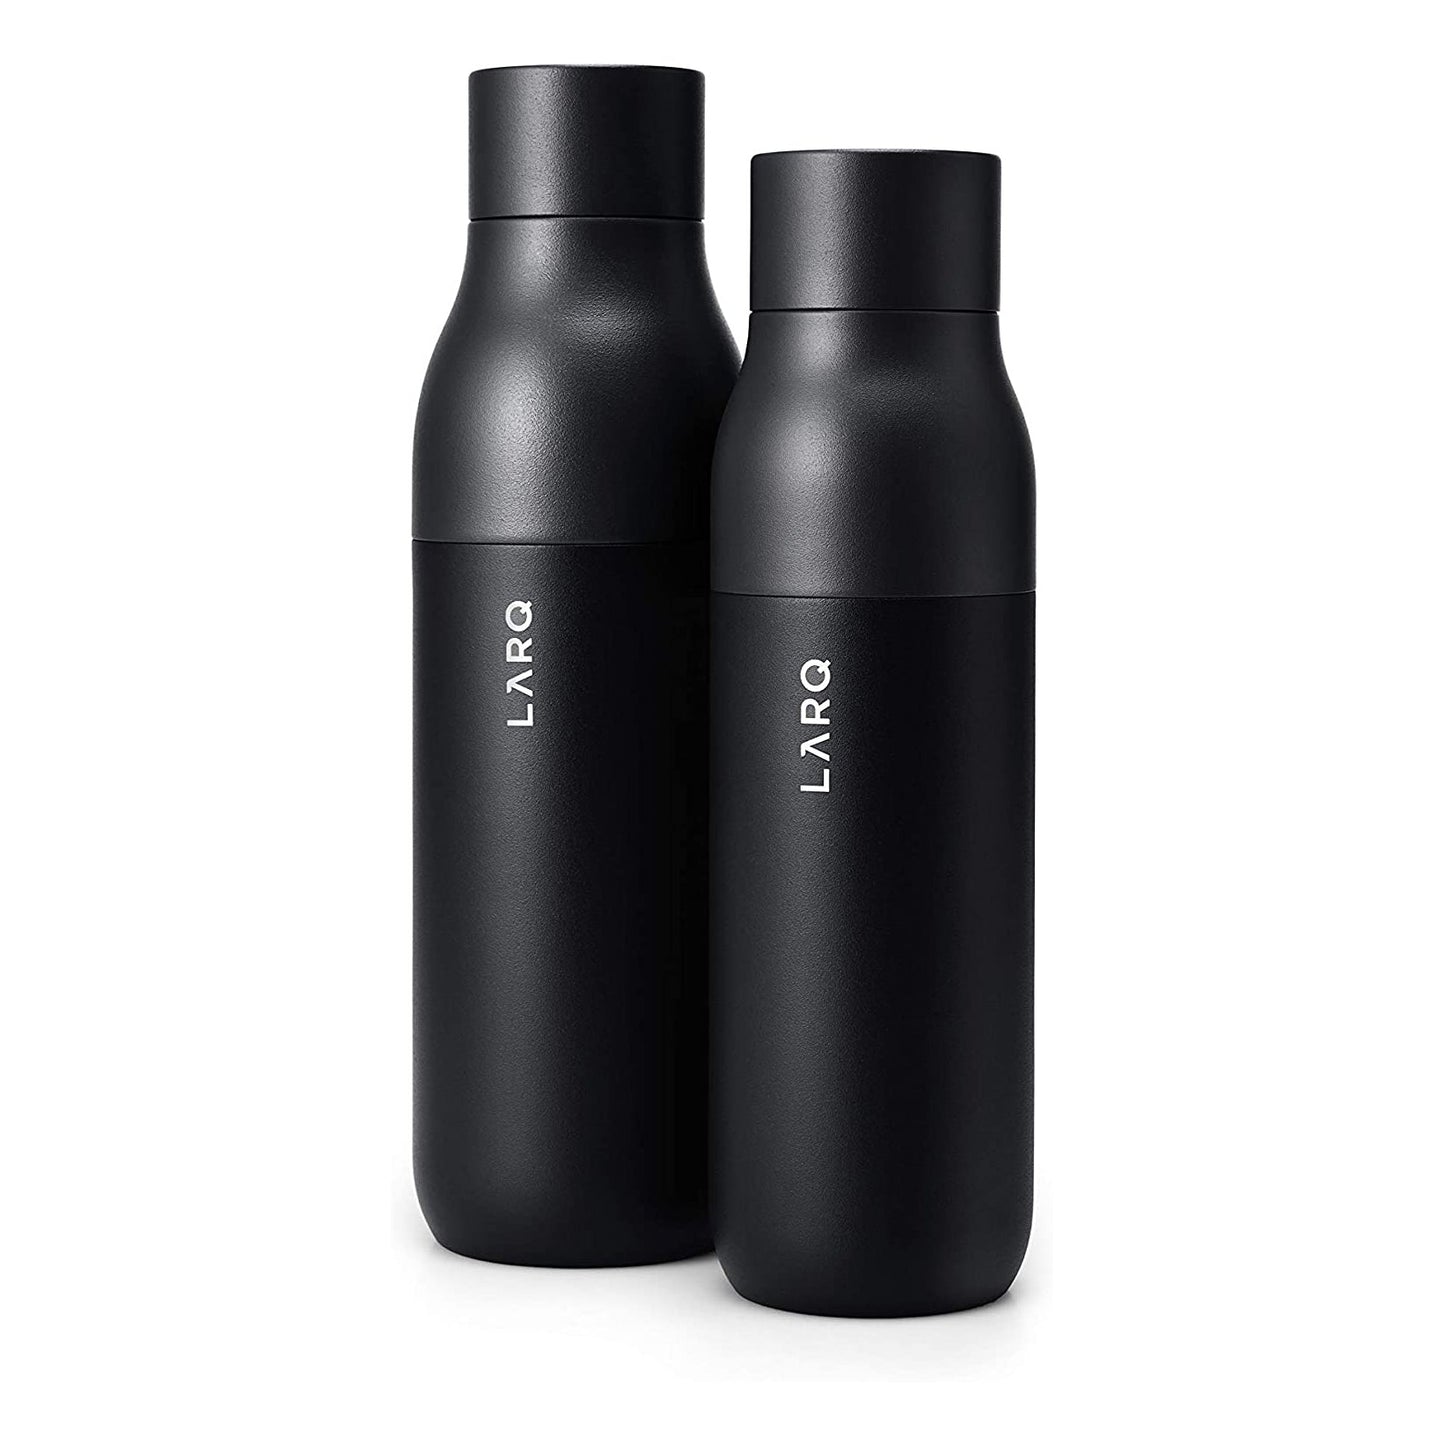 LARQ - PureVis Movement Water Bottle - Obsidian Black - 32 oz